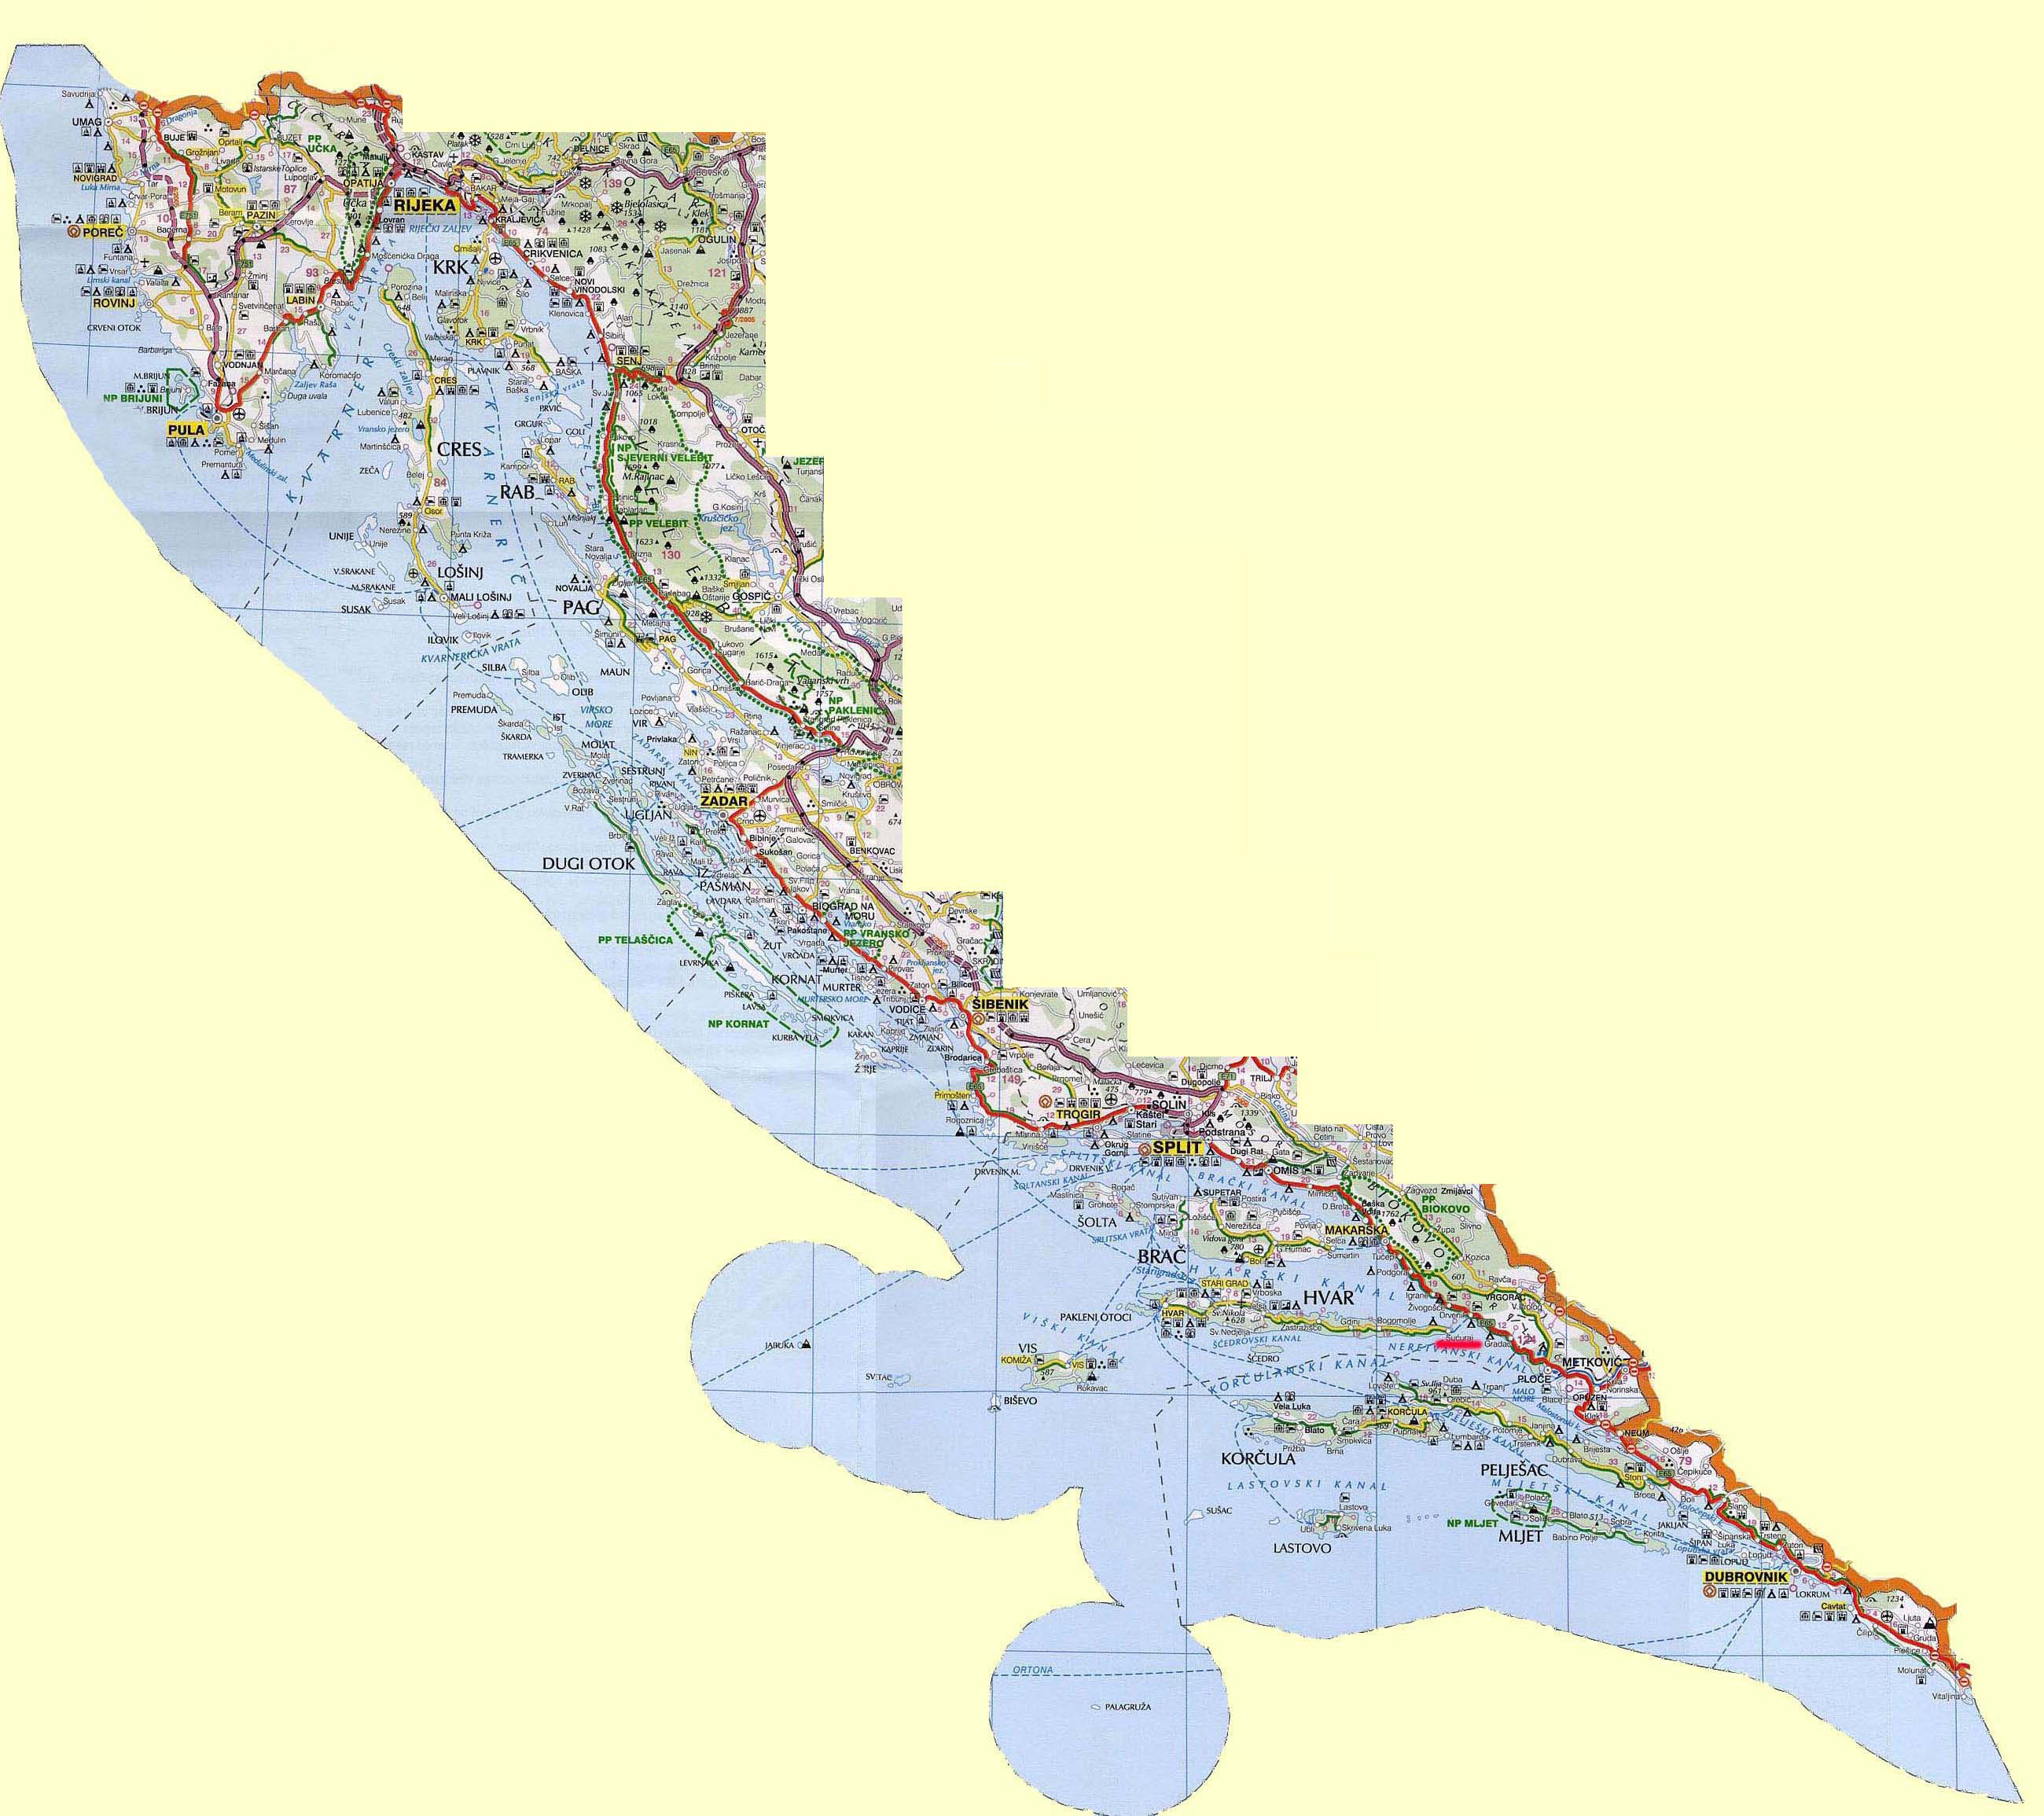 Detailed Road Map Of The Croatian Coast Croatia Europe Mapsland Maps Of The World